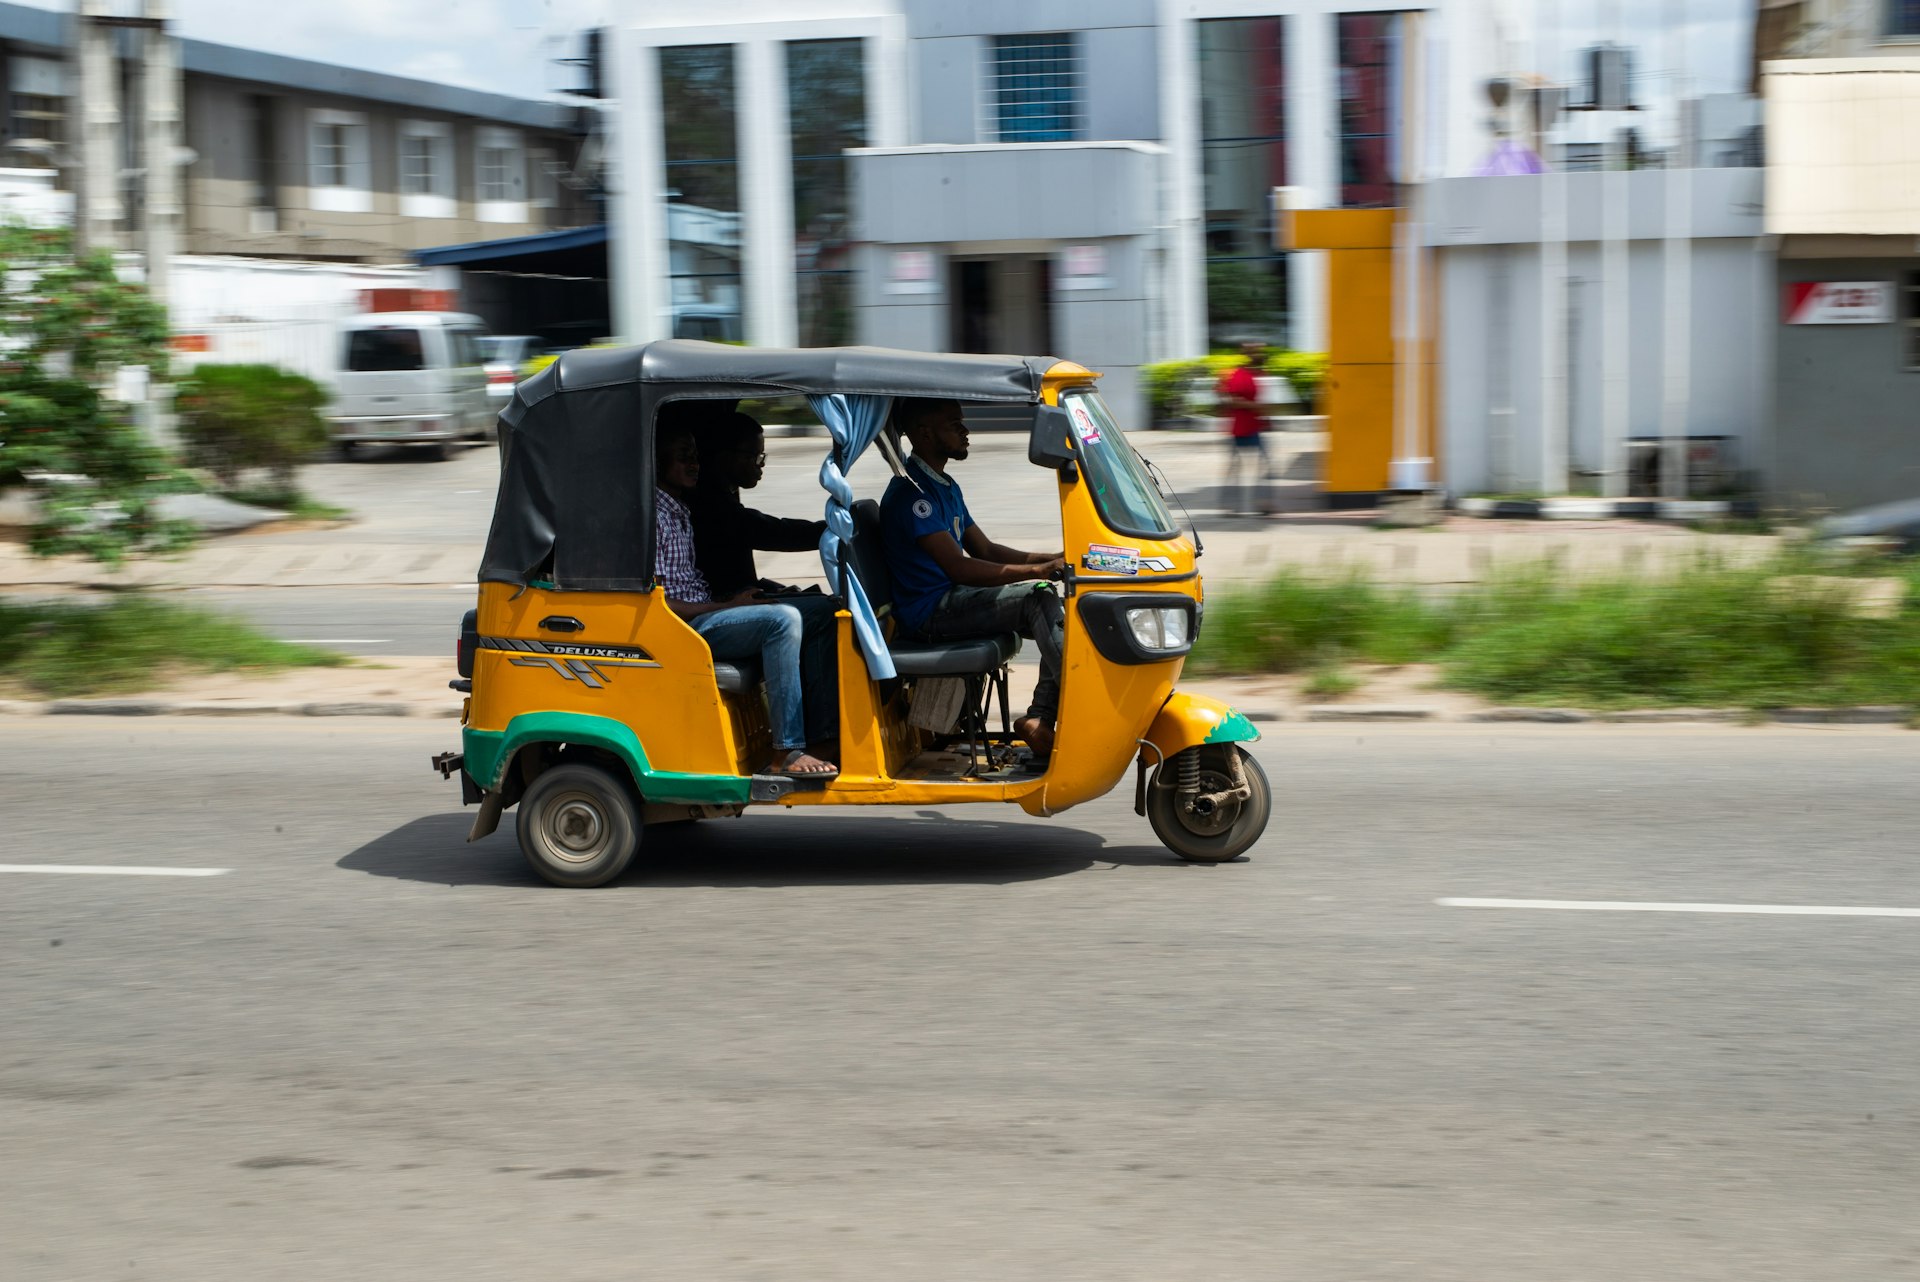 A keke (three-wheeled taxi) on a street in Lagos, Nigeria